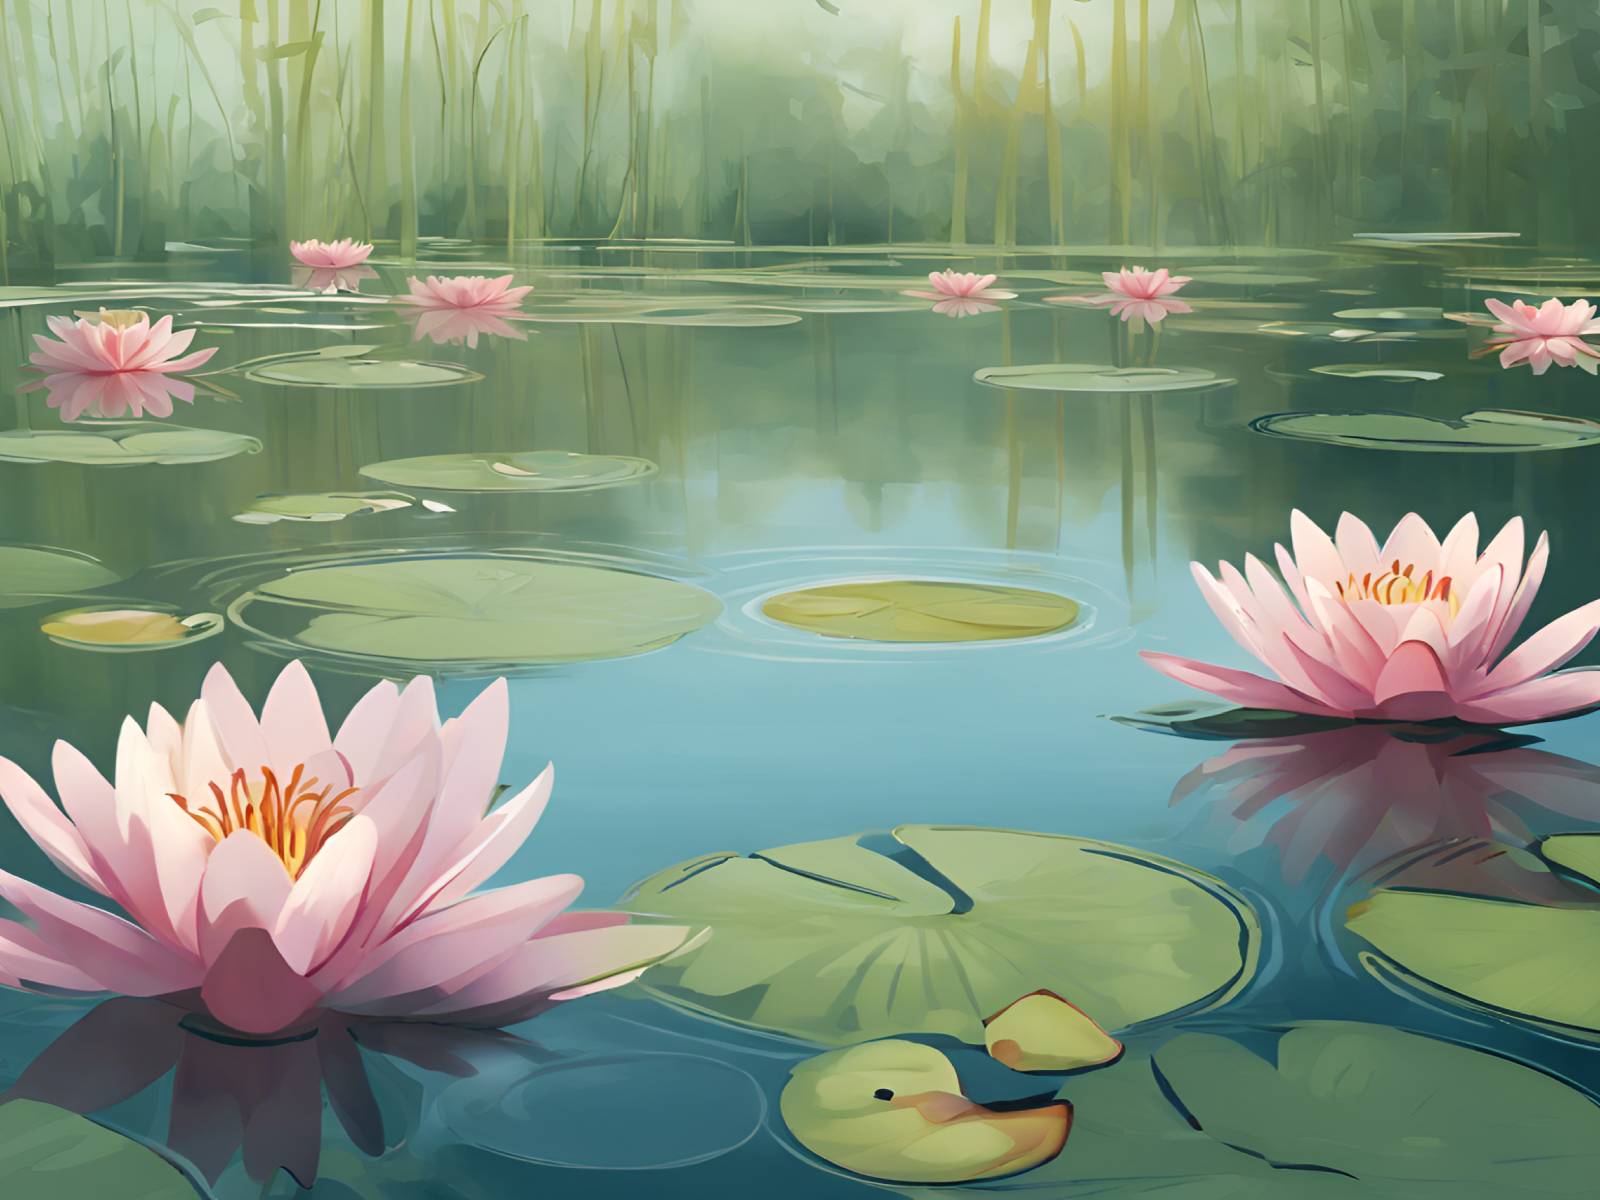 diamants-wizard-diamond-painting-kits-Nature-Flower-Lily-Pond-Serenity-original.jpg